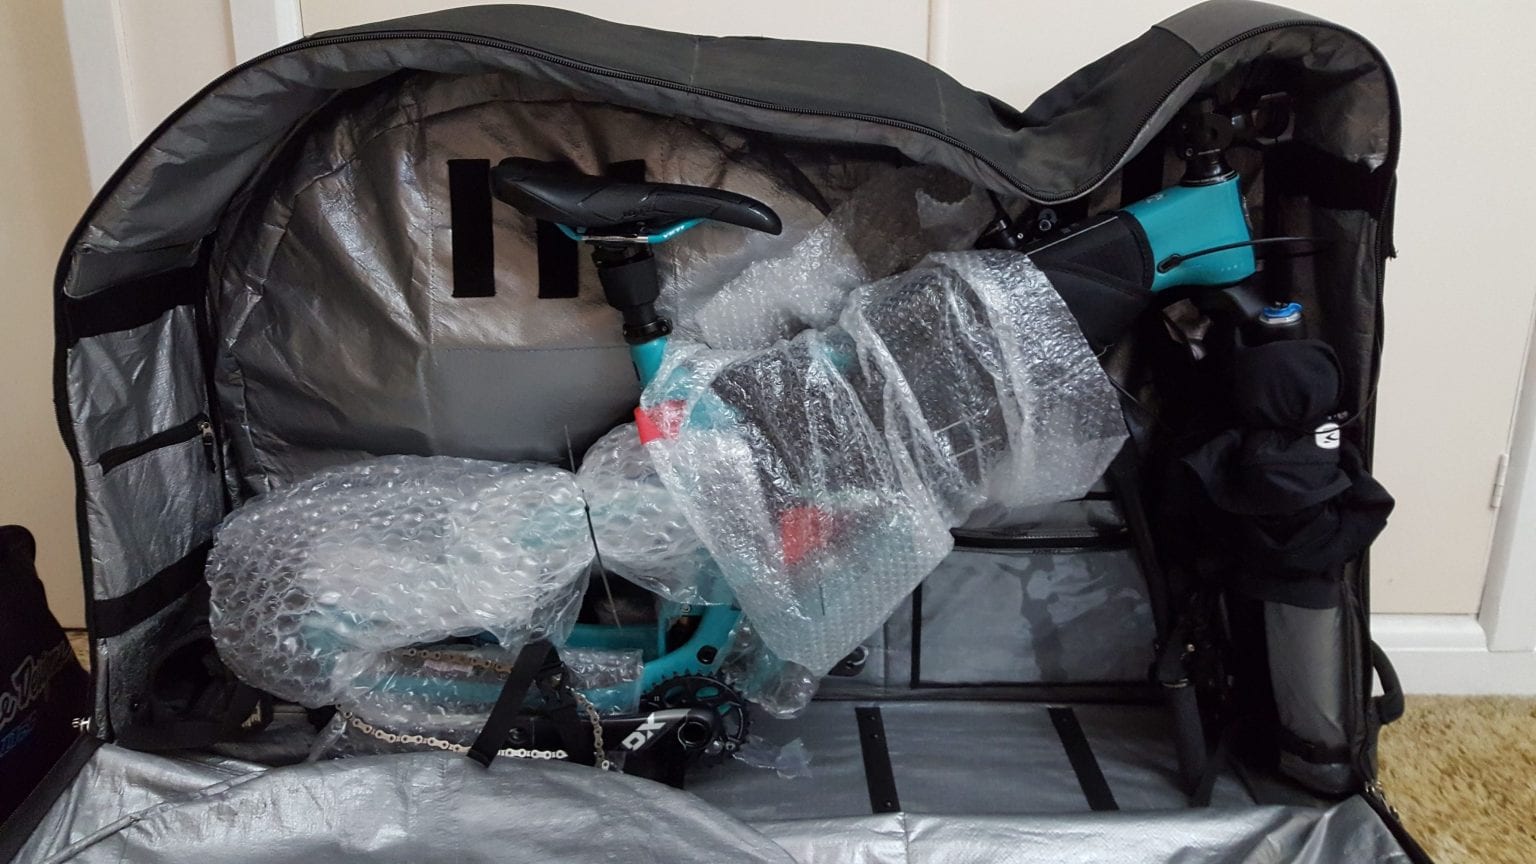 Yeti packed into an EVOC bike bag